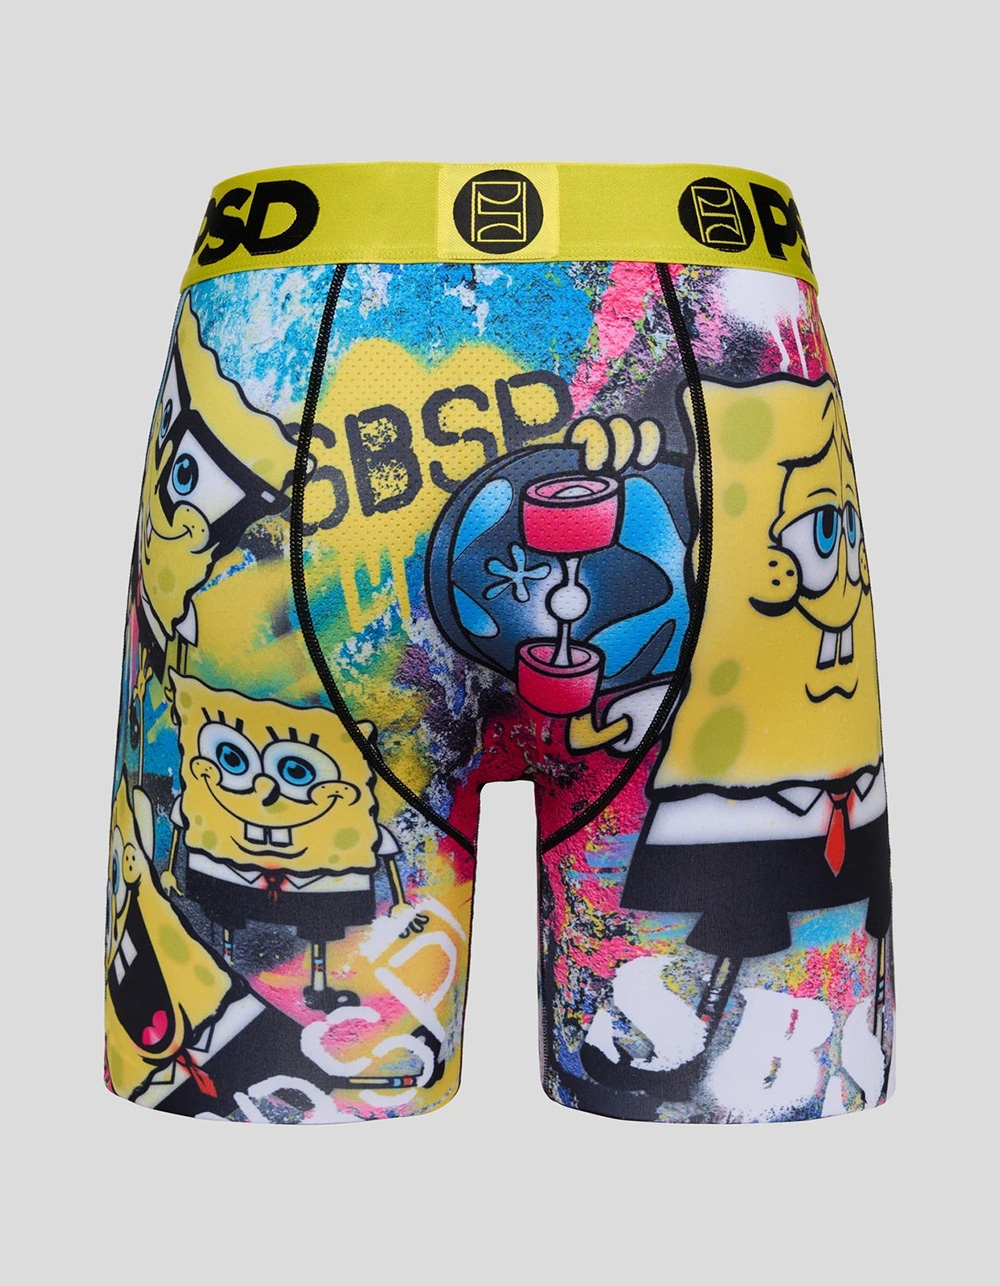 PSD x SpongeBob SquarePants SBSP Mens Boxer Briefs - MULTI